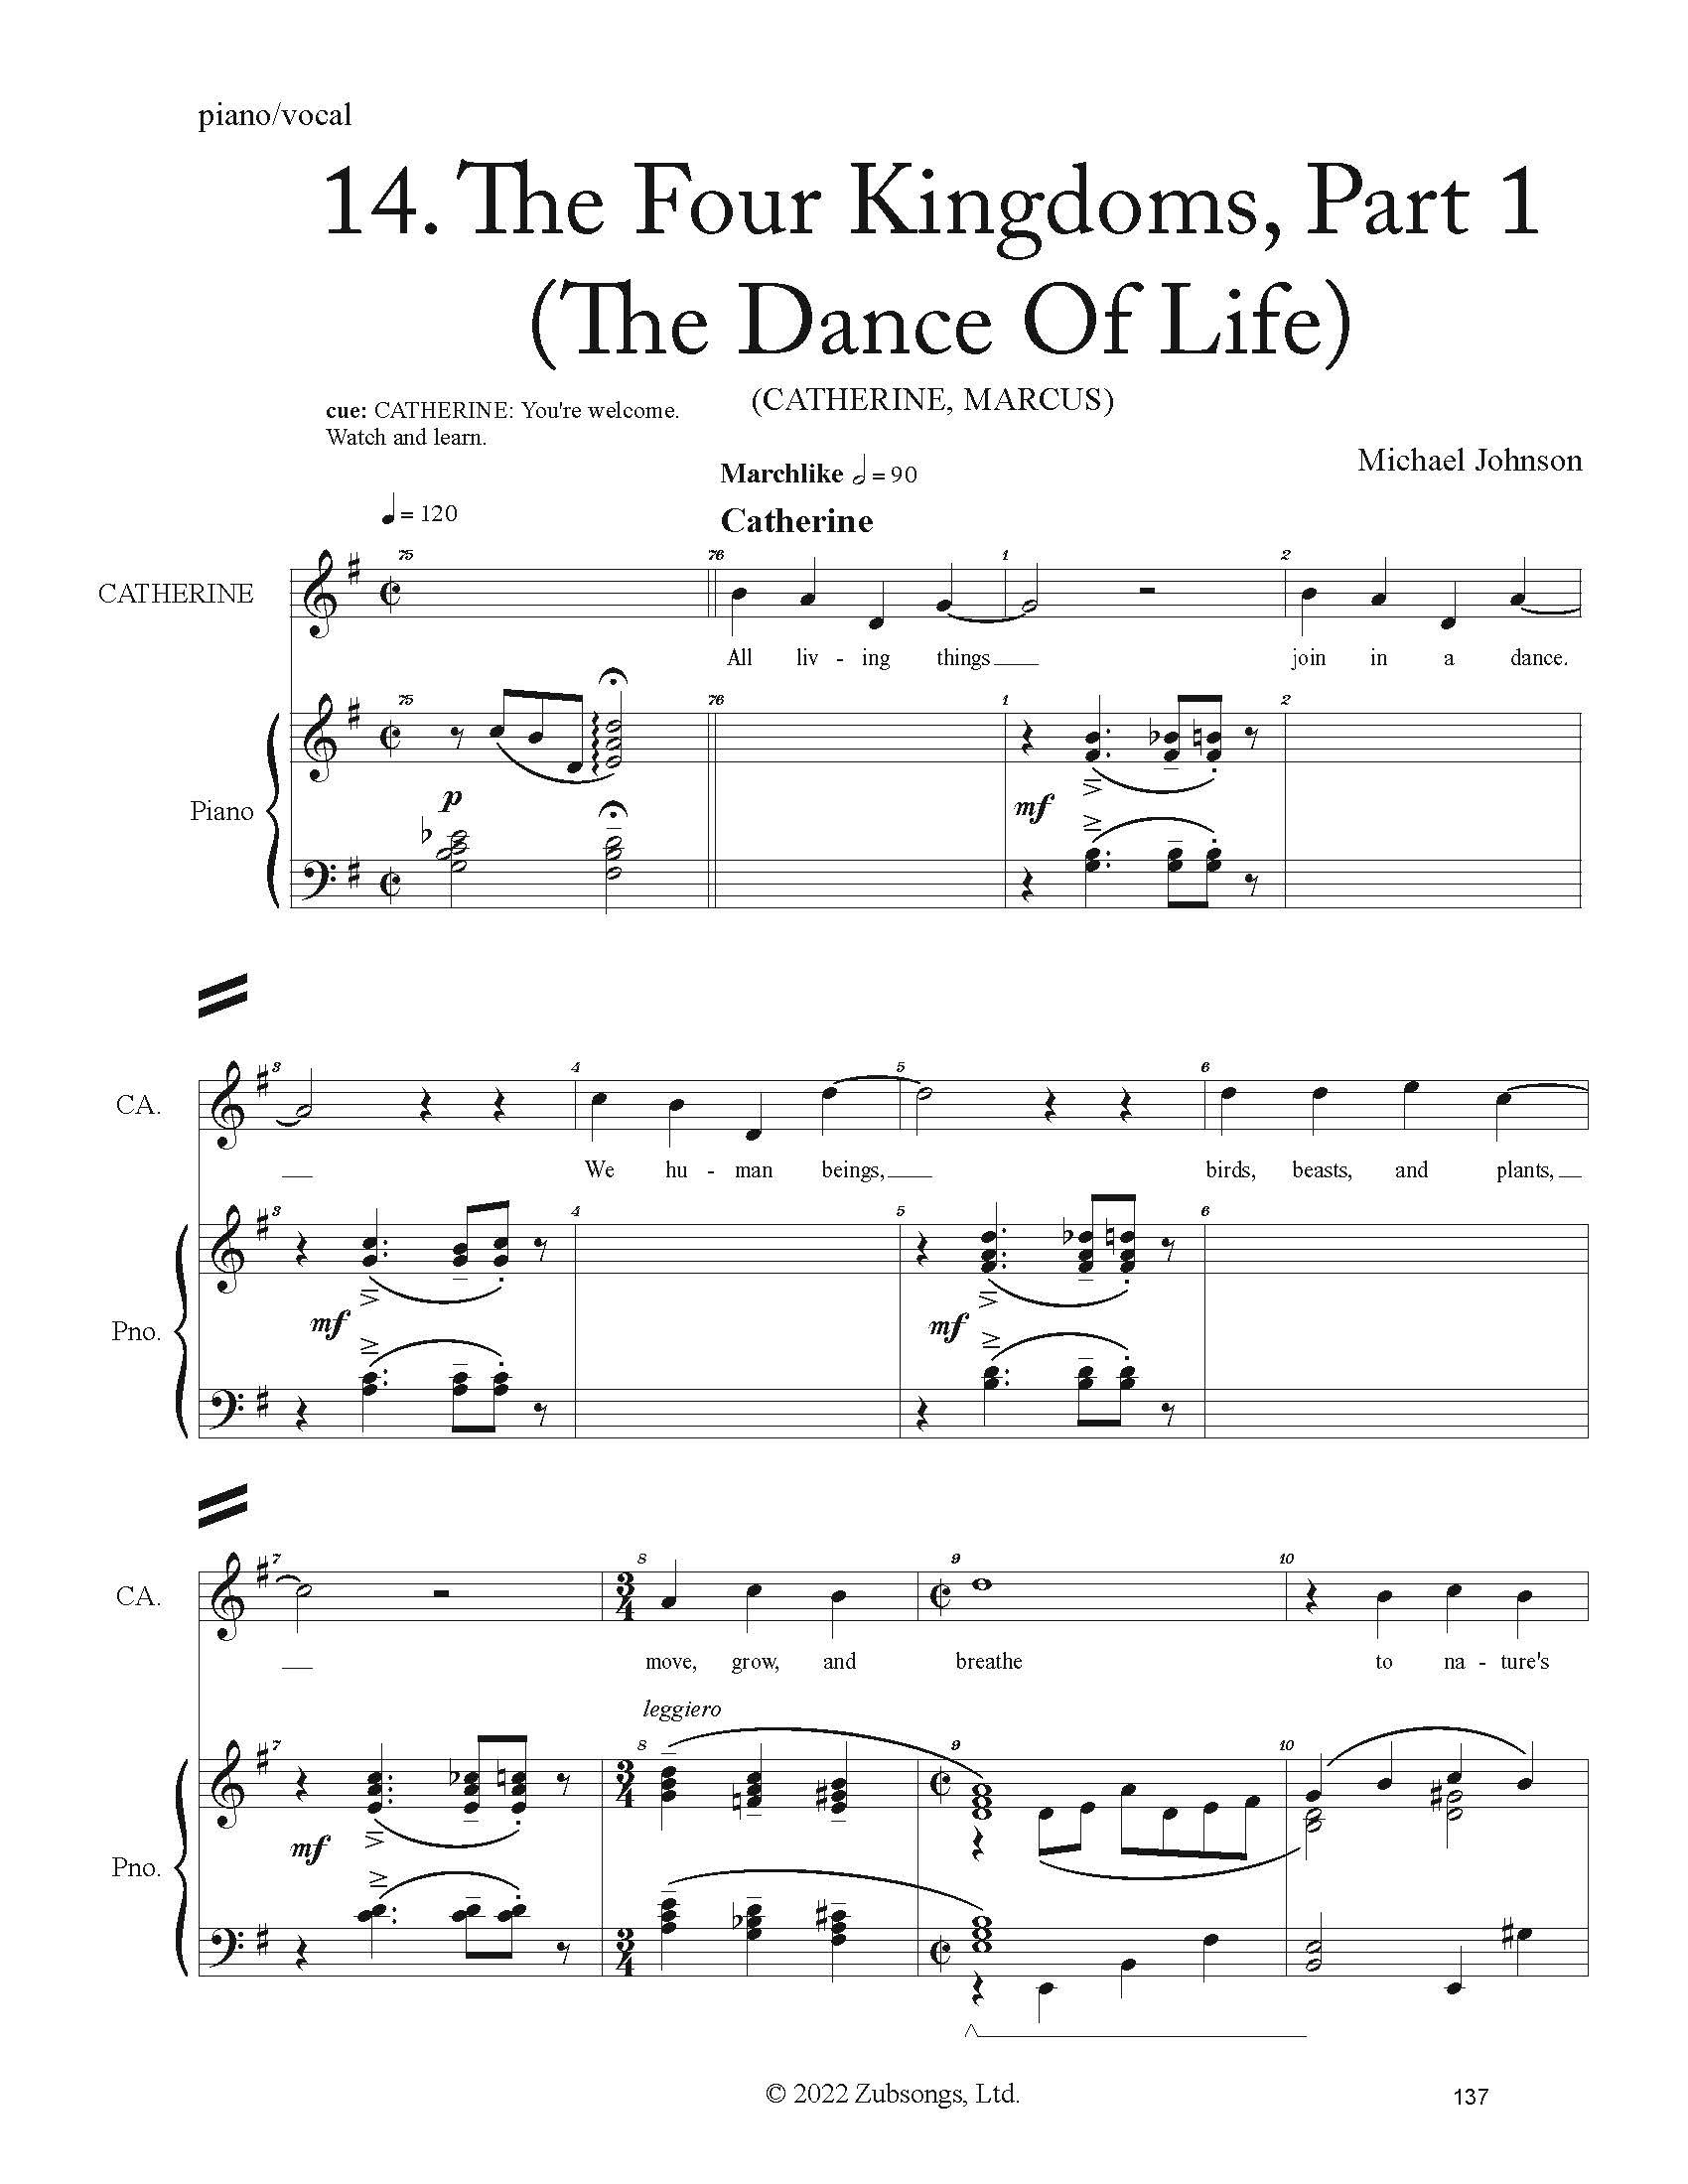 FULL PIANO VOCAL SCORE DRAFT 1 - Score_Page_137.jpg